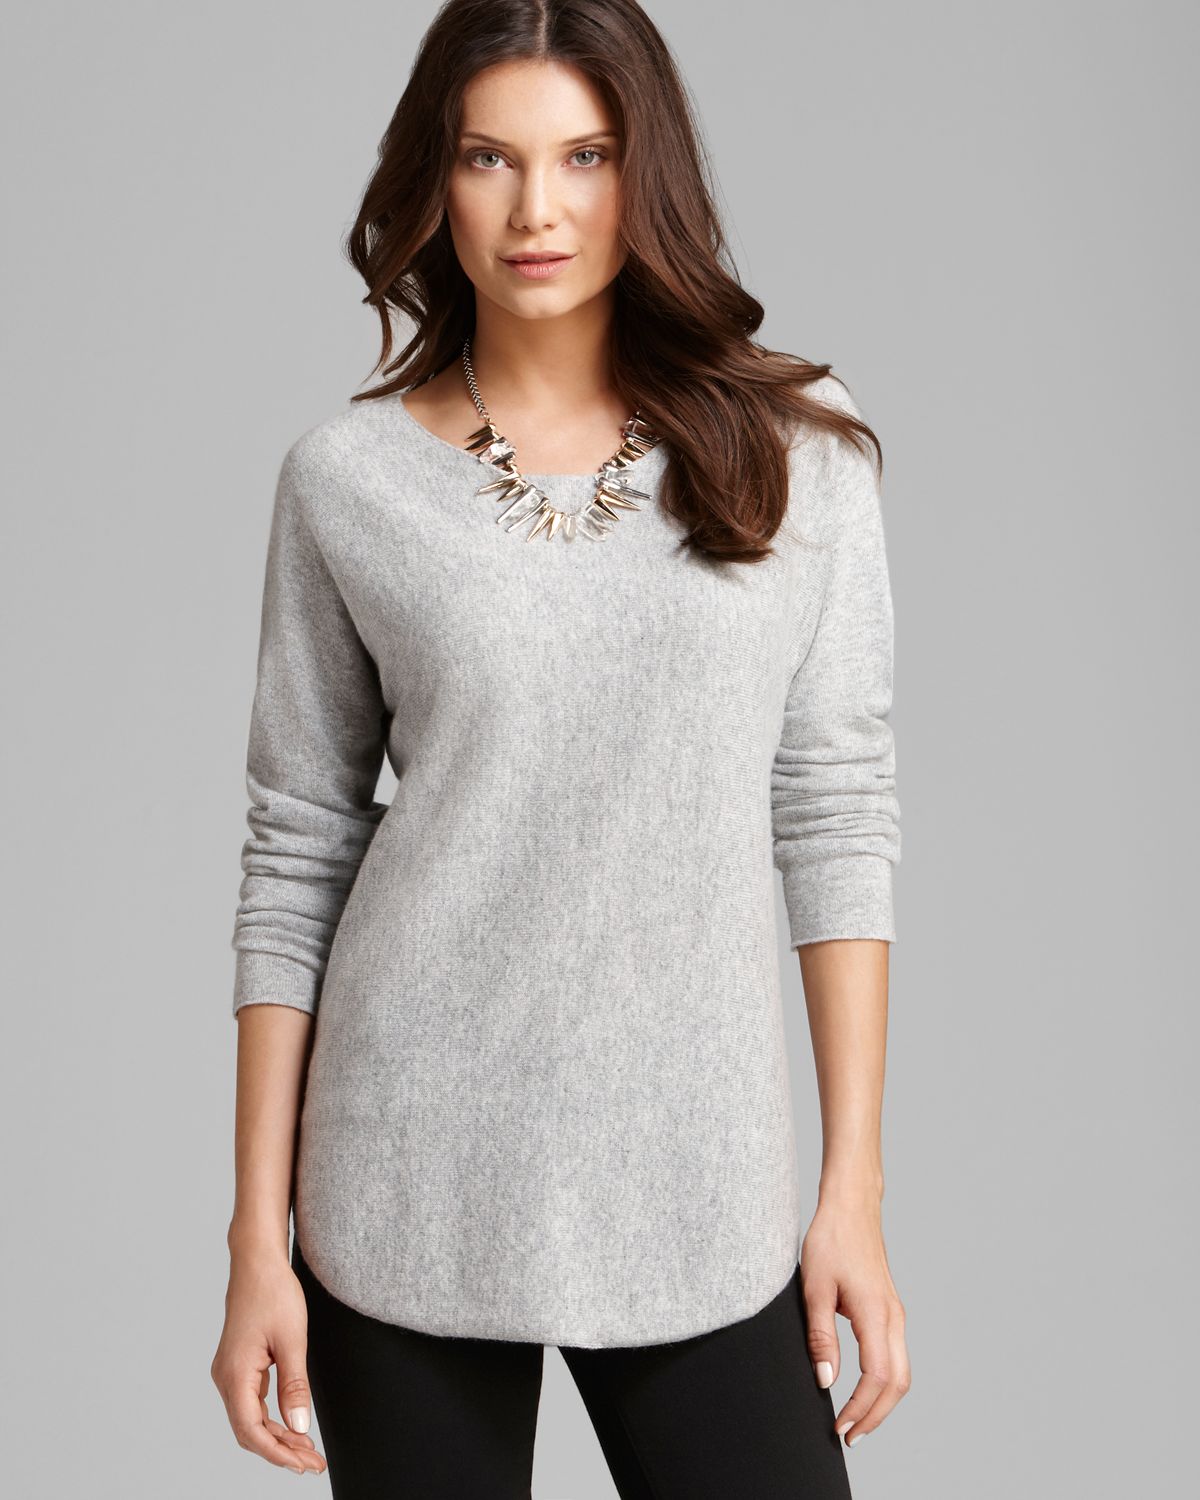 michael kors gray sweater